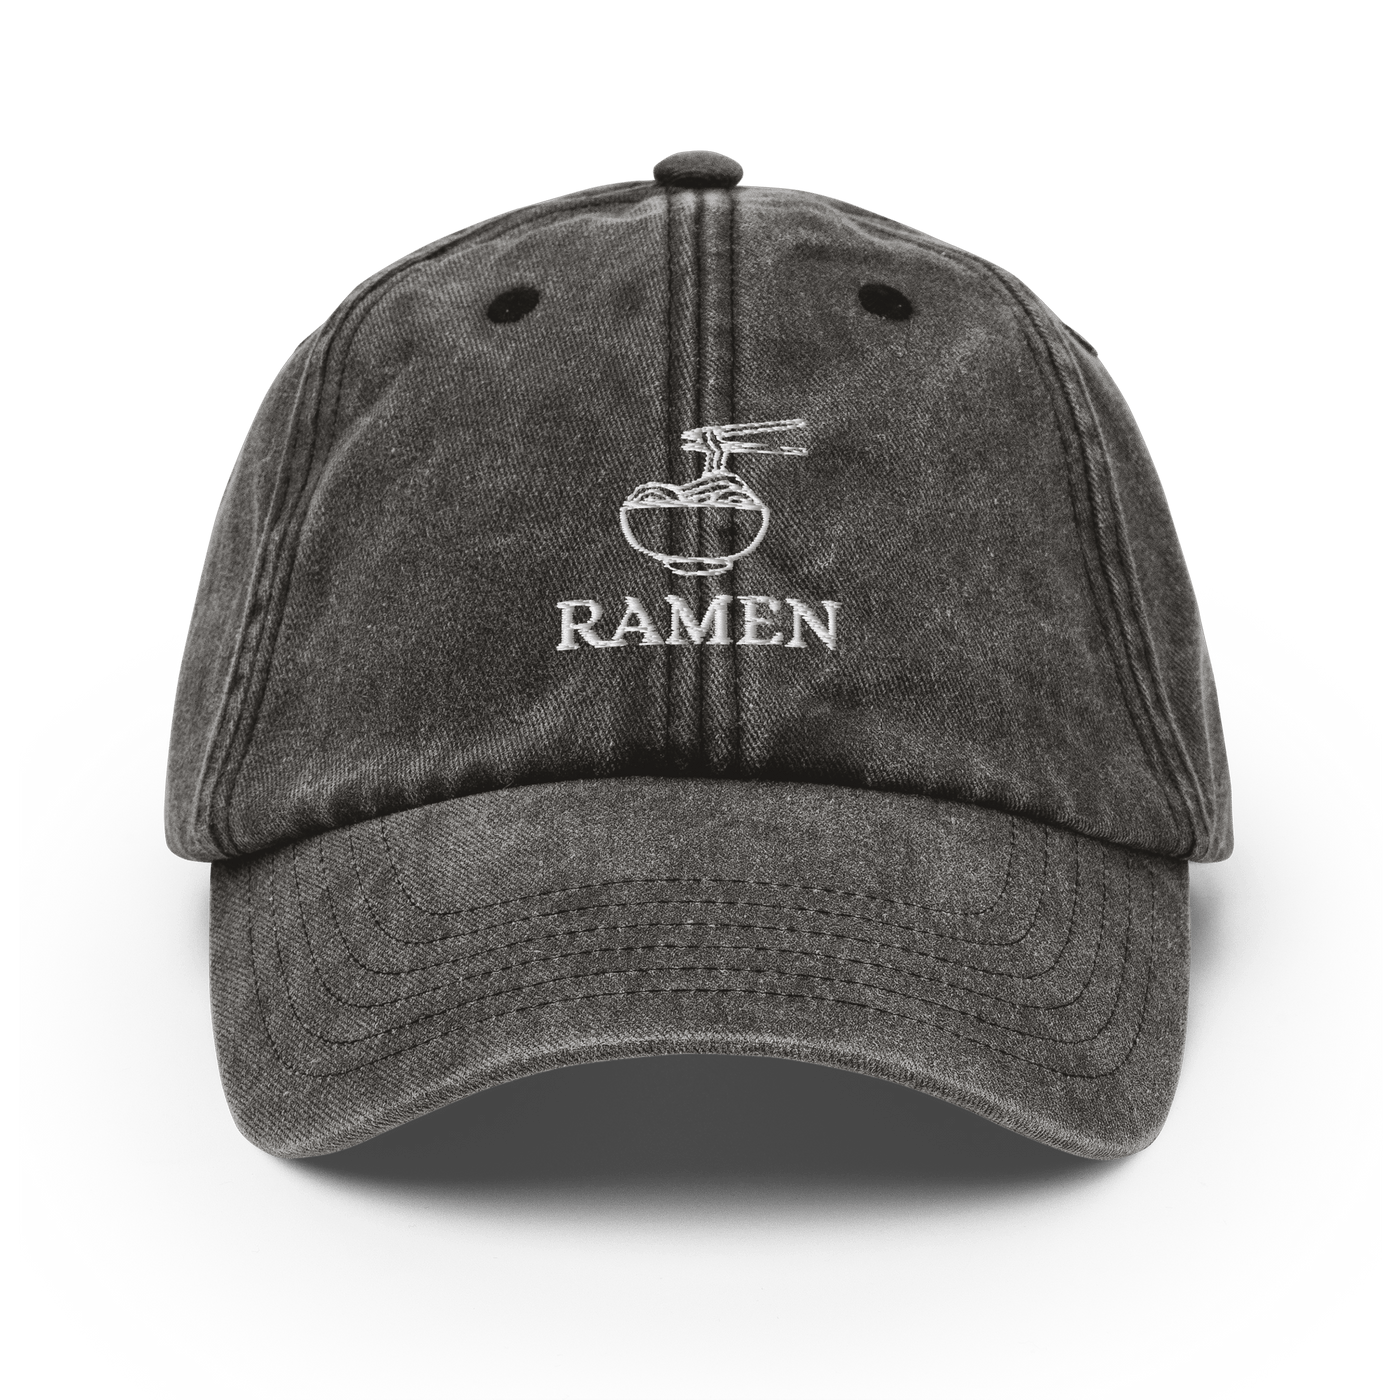 Ramen Bowl Vintage Hat - Vintage Black - - Just Another Cap Store